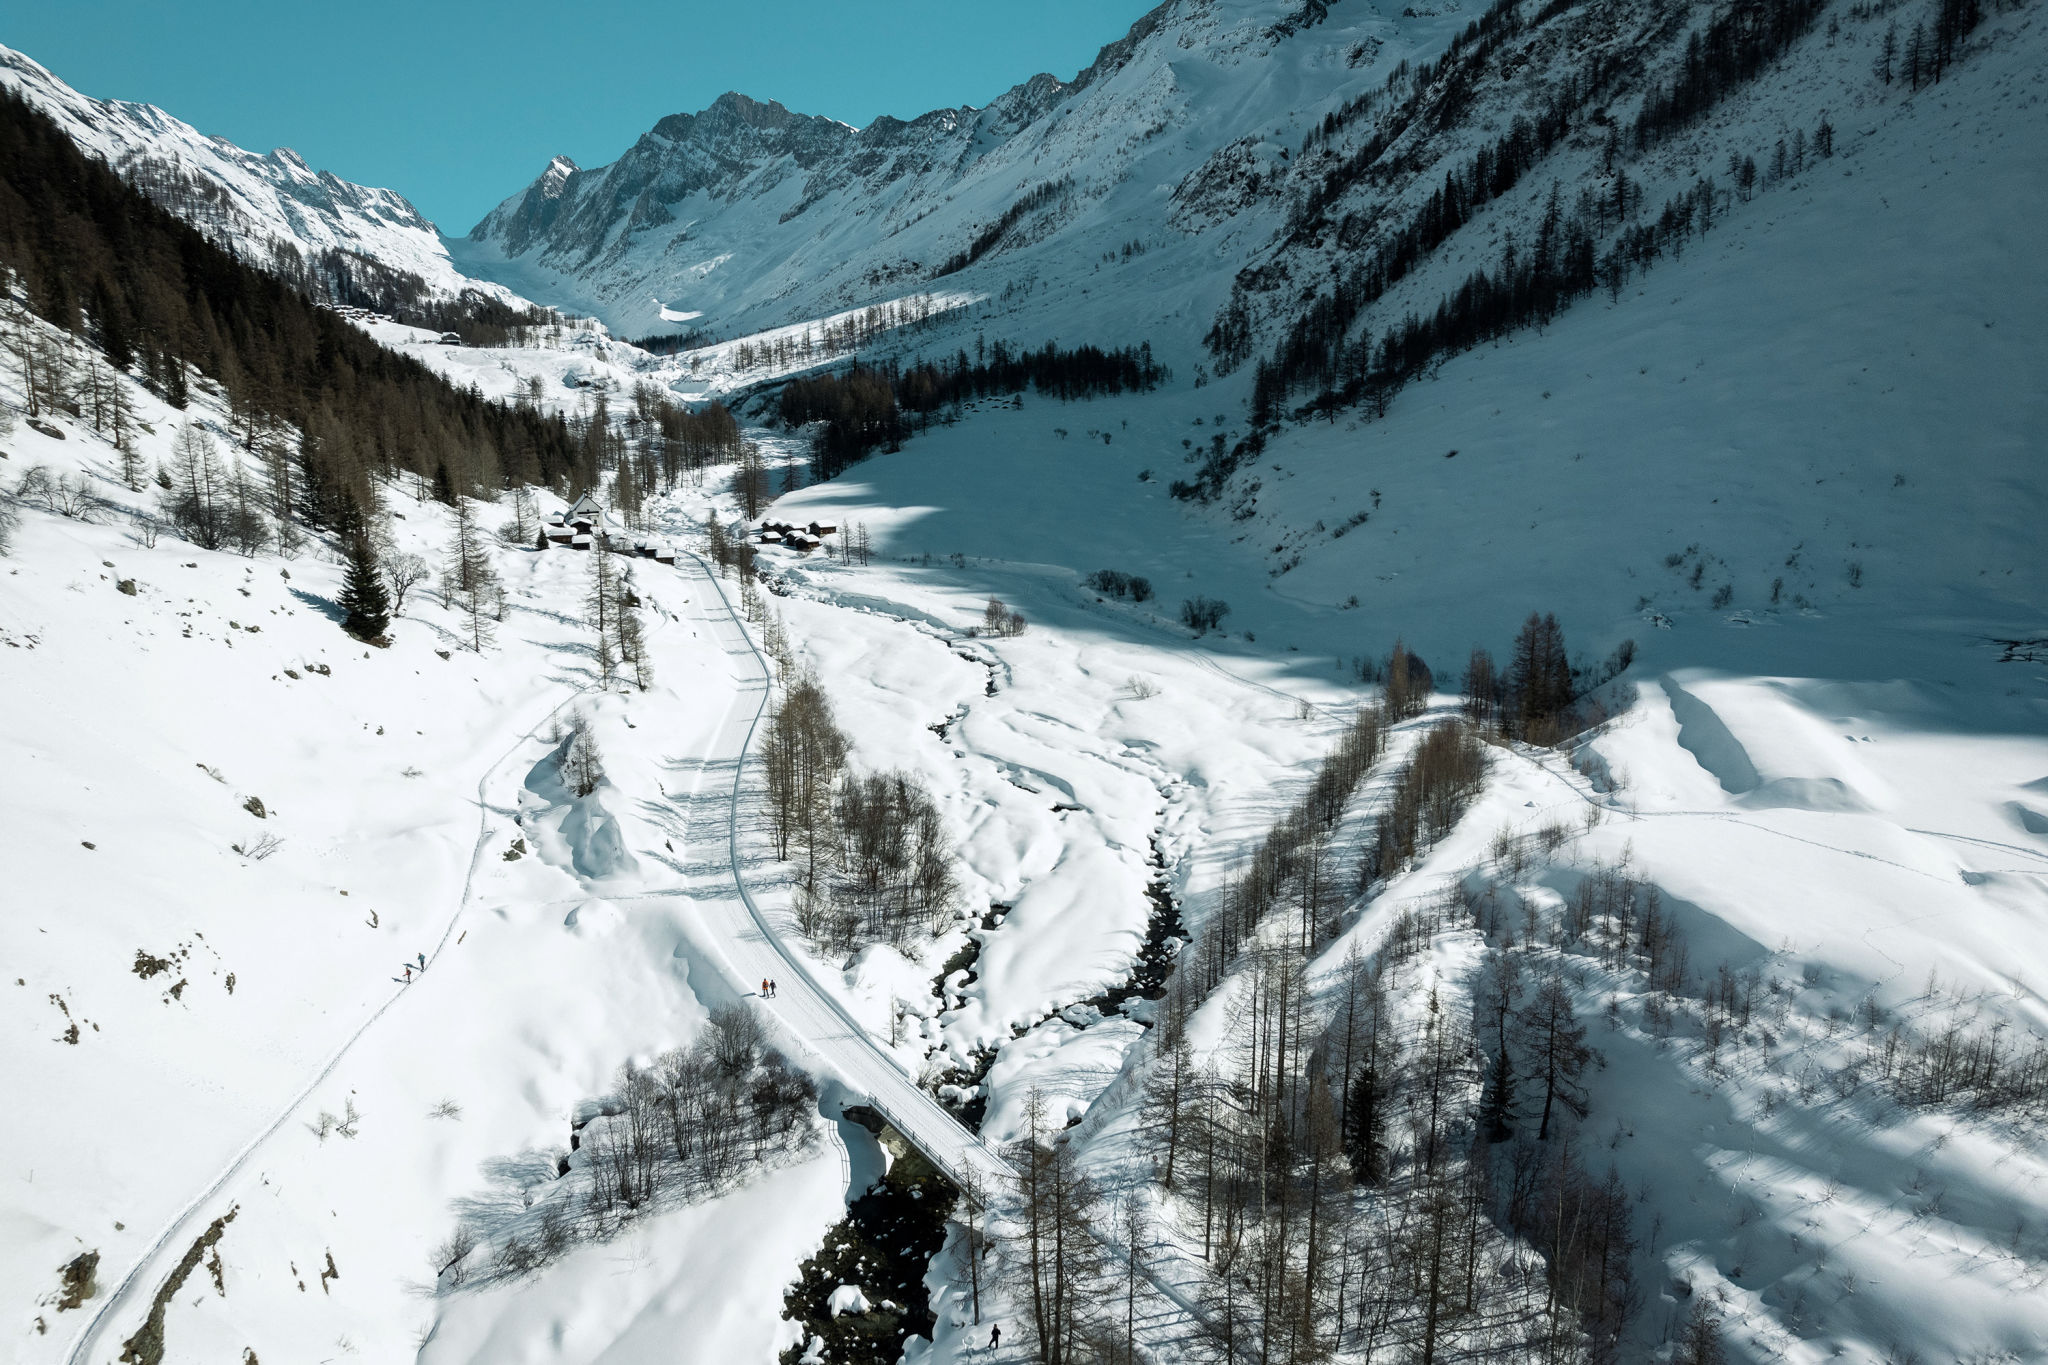 Winter hiking trail to the Fafleralp. 
Valais, Swizerland